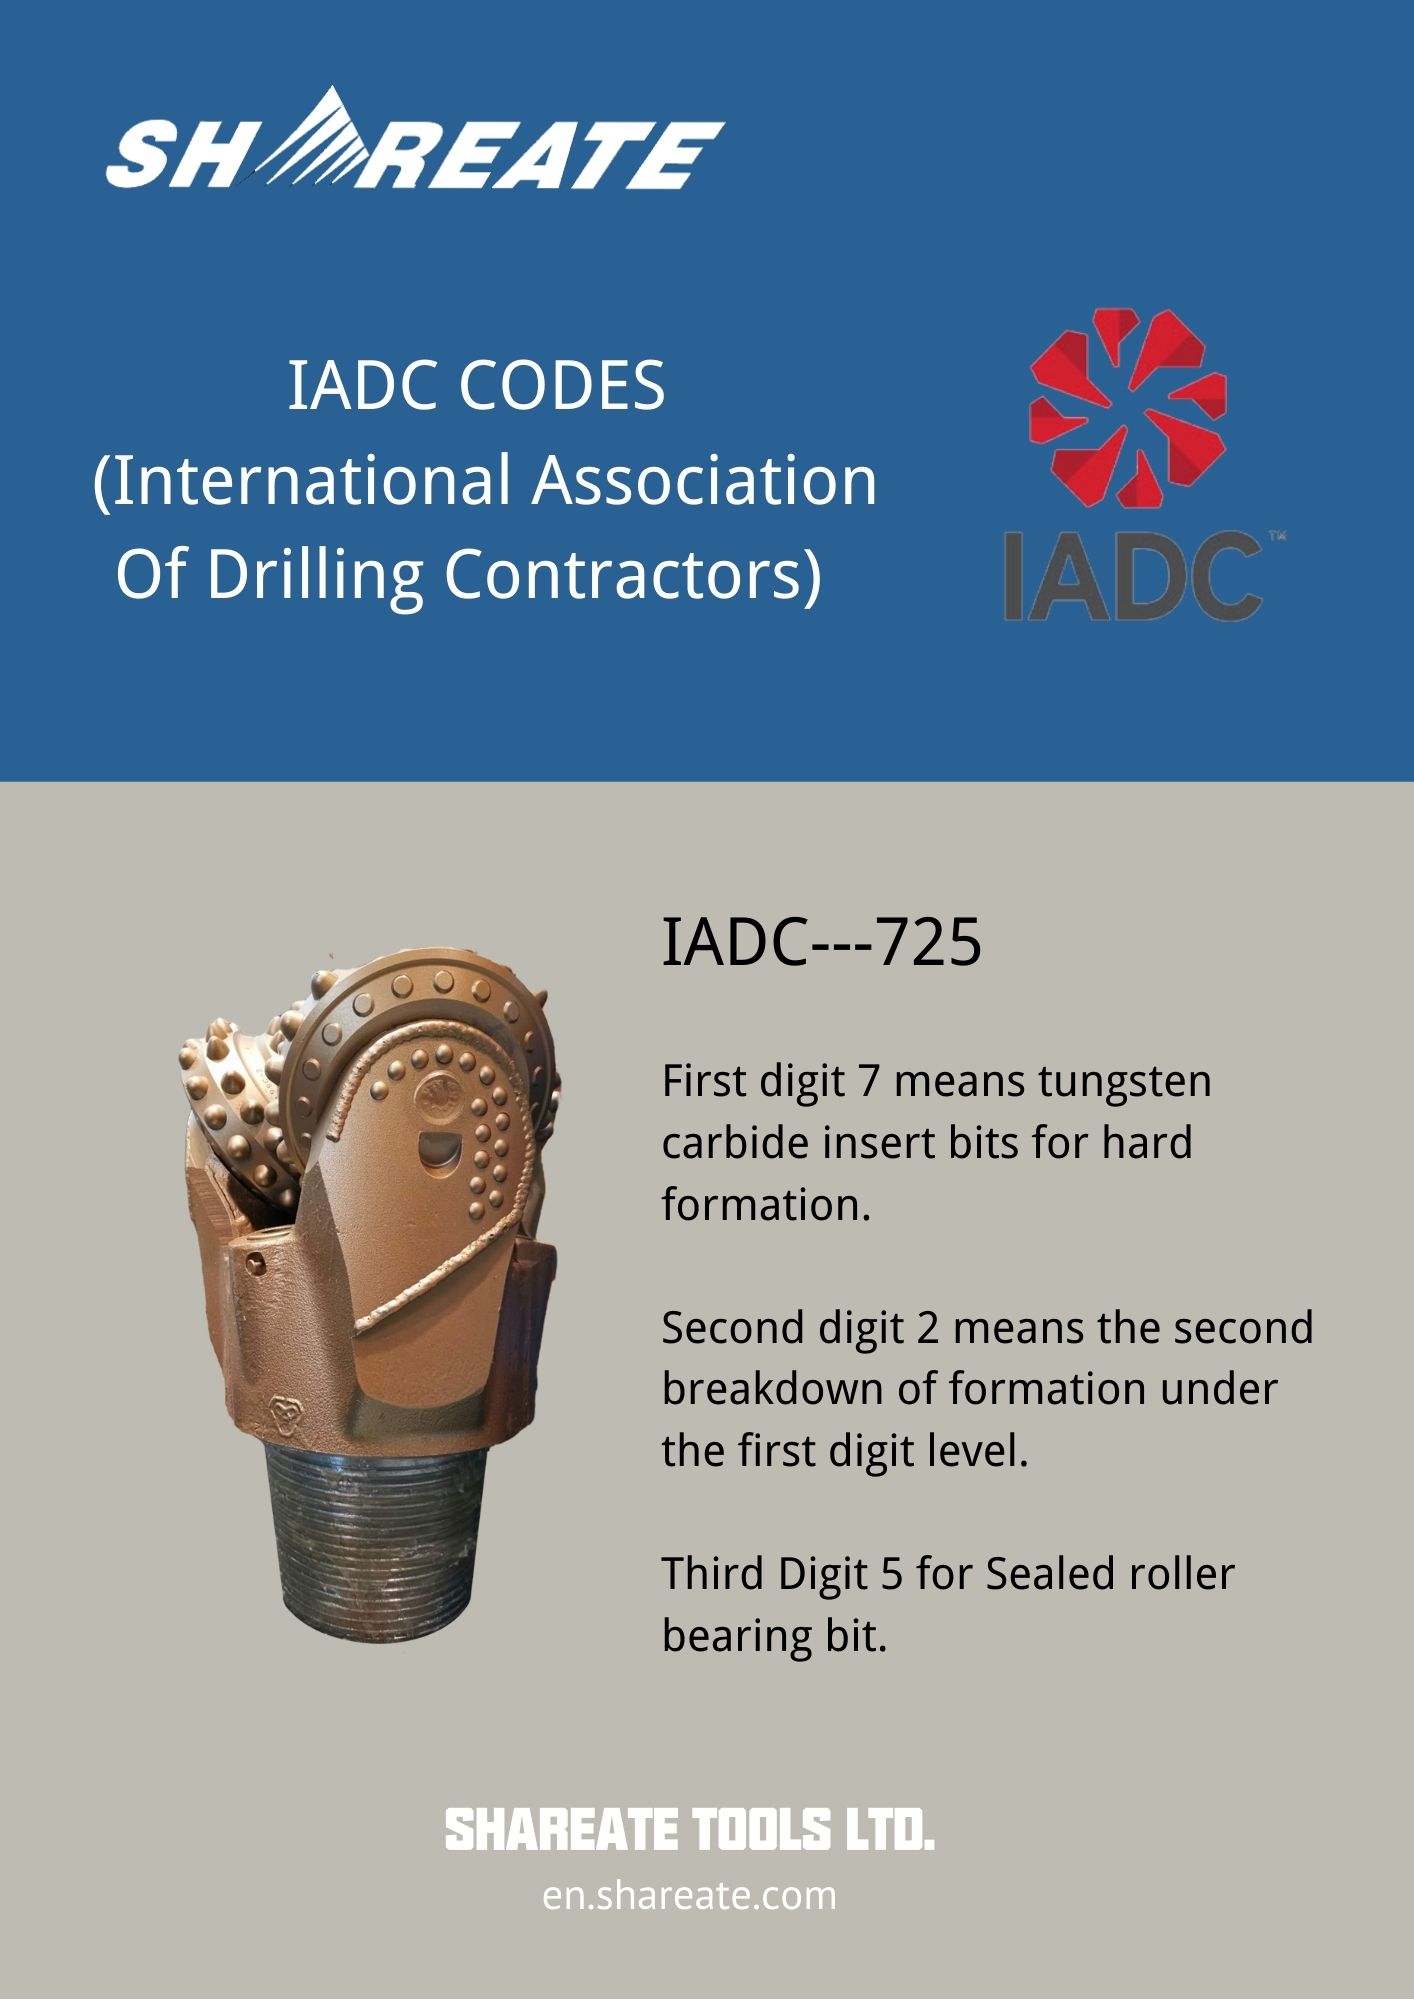 IADC (International Association Of Drilling Contractors) CODES